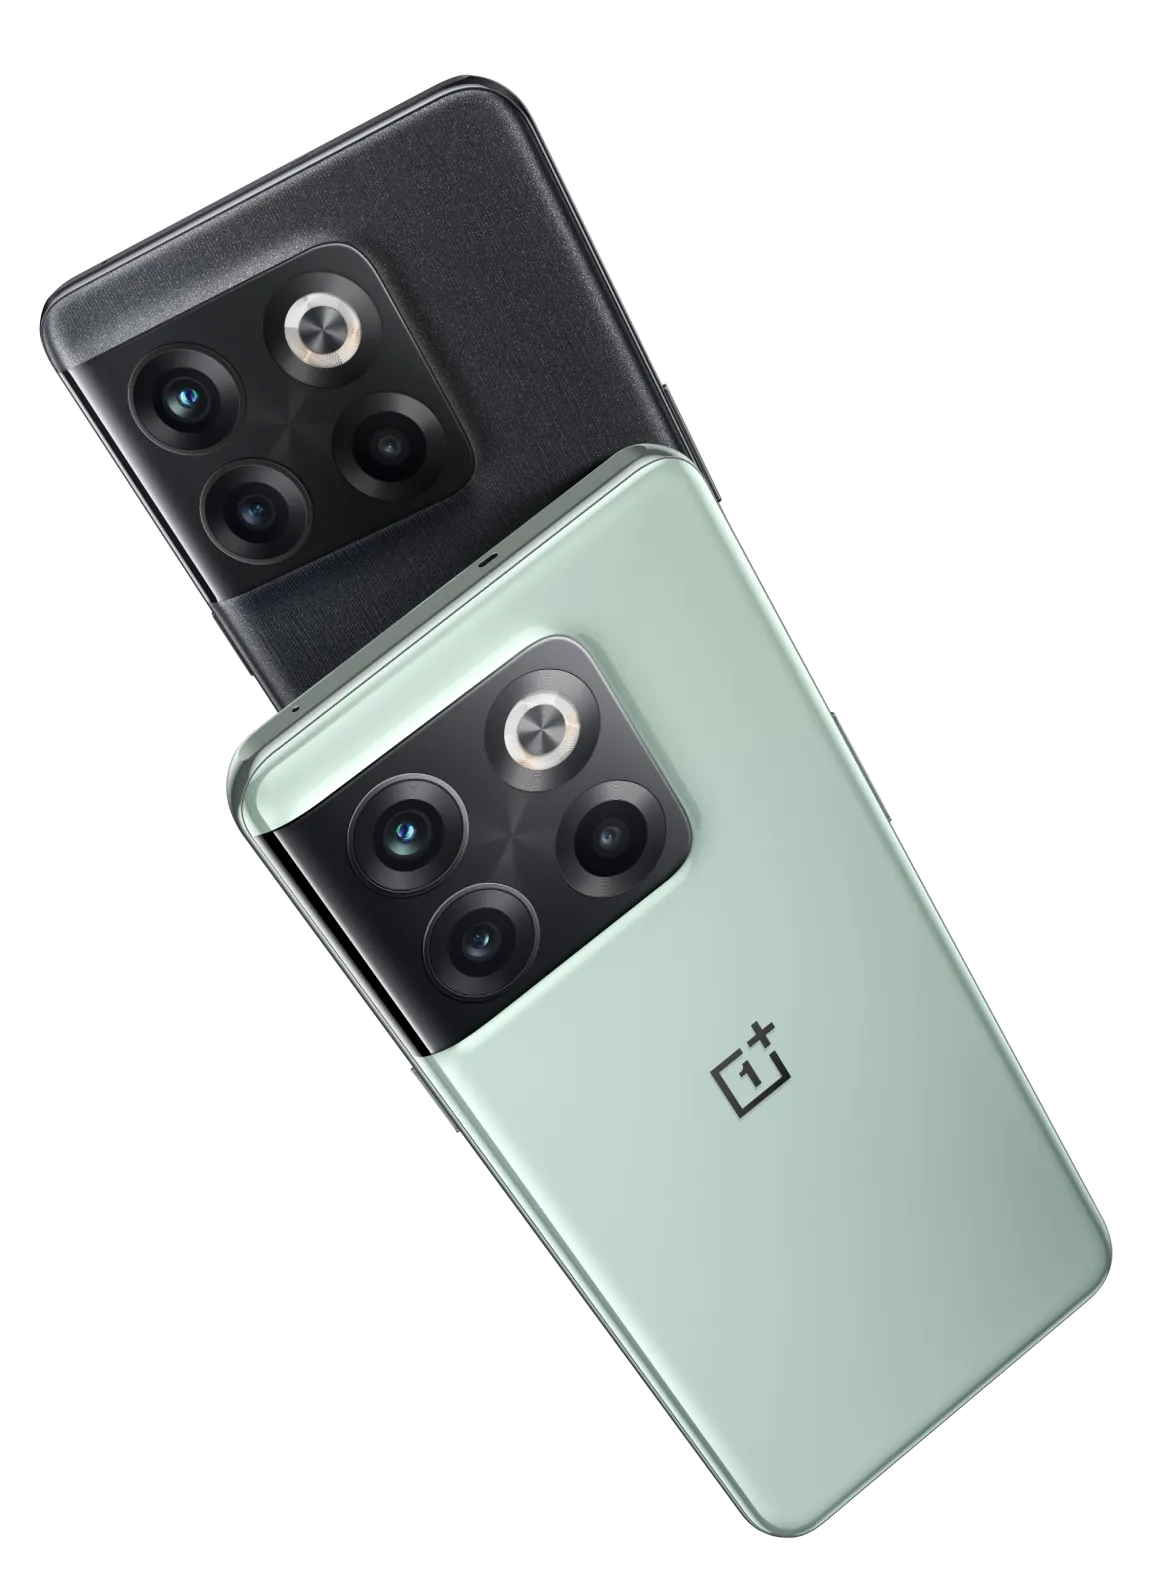 OnePlus 10T 5G Design, Camera Specifications Leaked; To Feature 50MP 1/1.5  Sensor, No Alert Slider - MySmartPrice